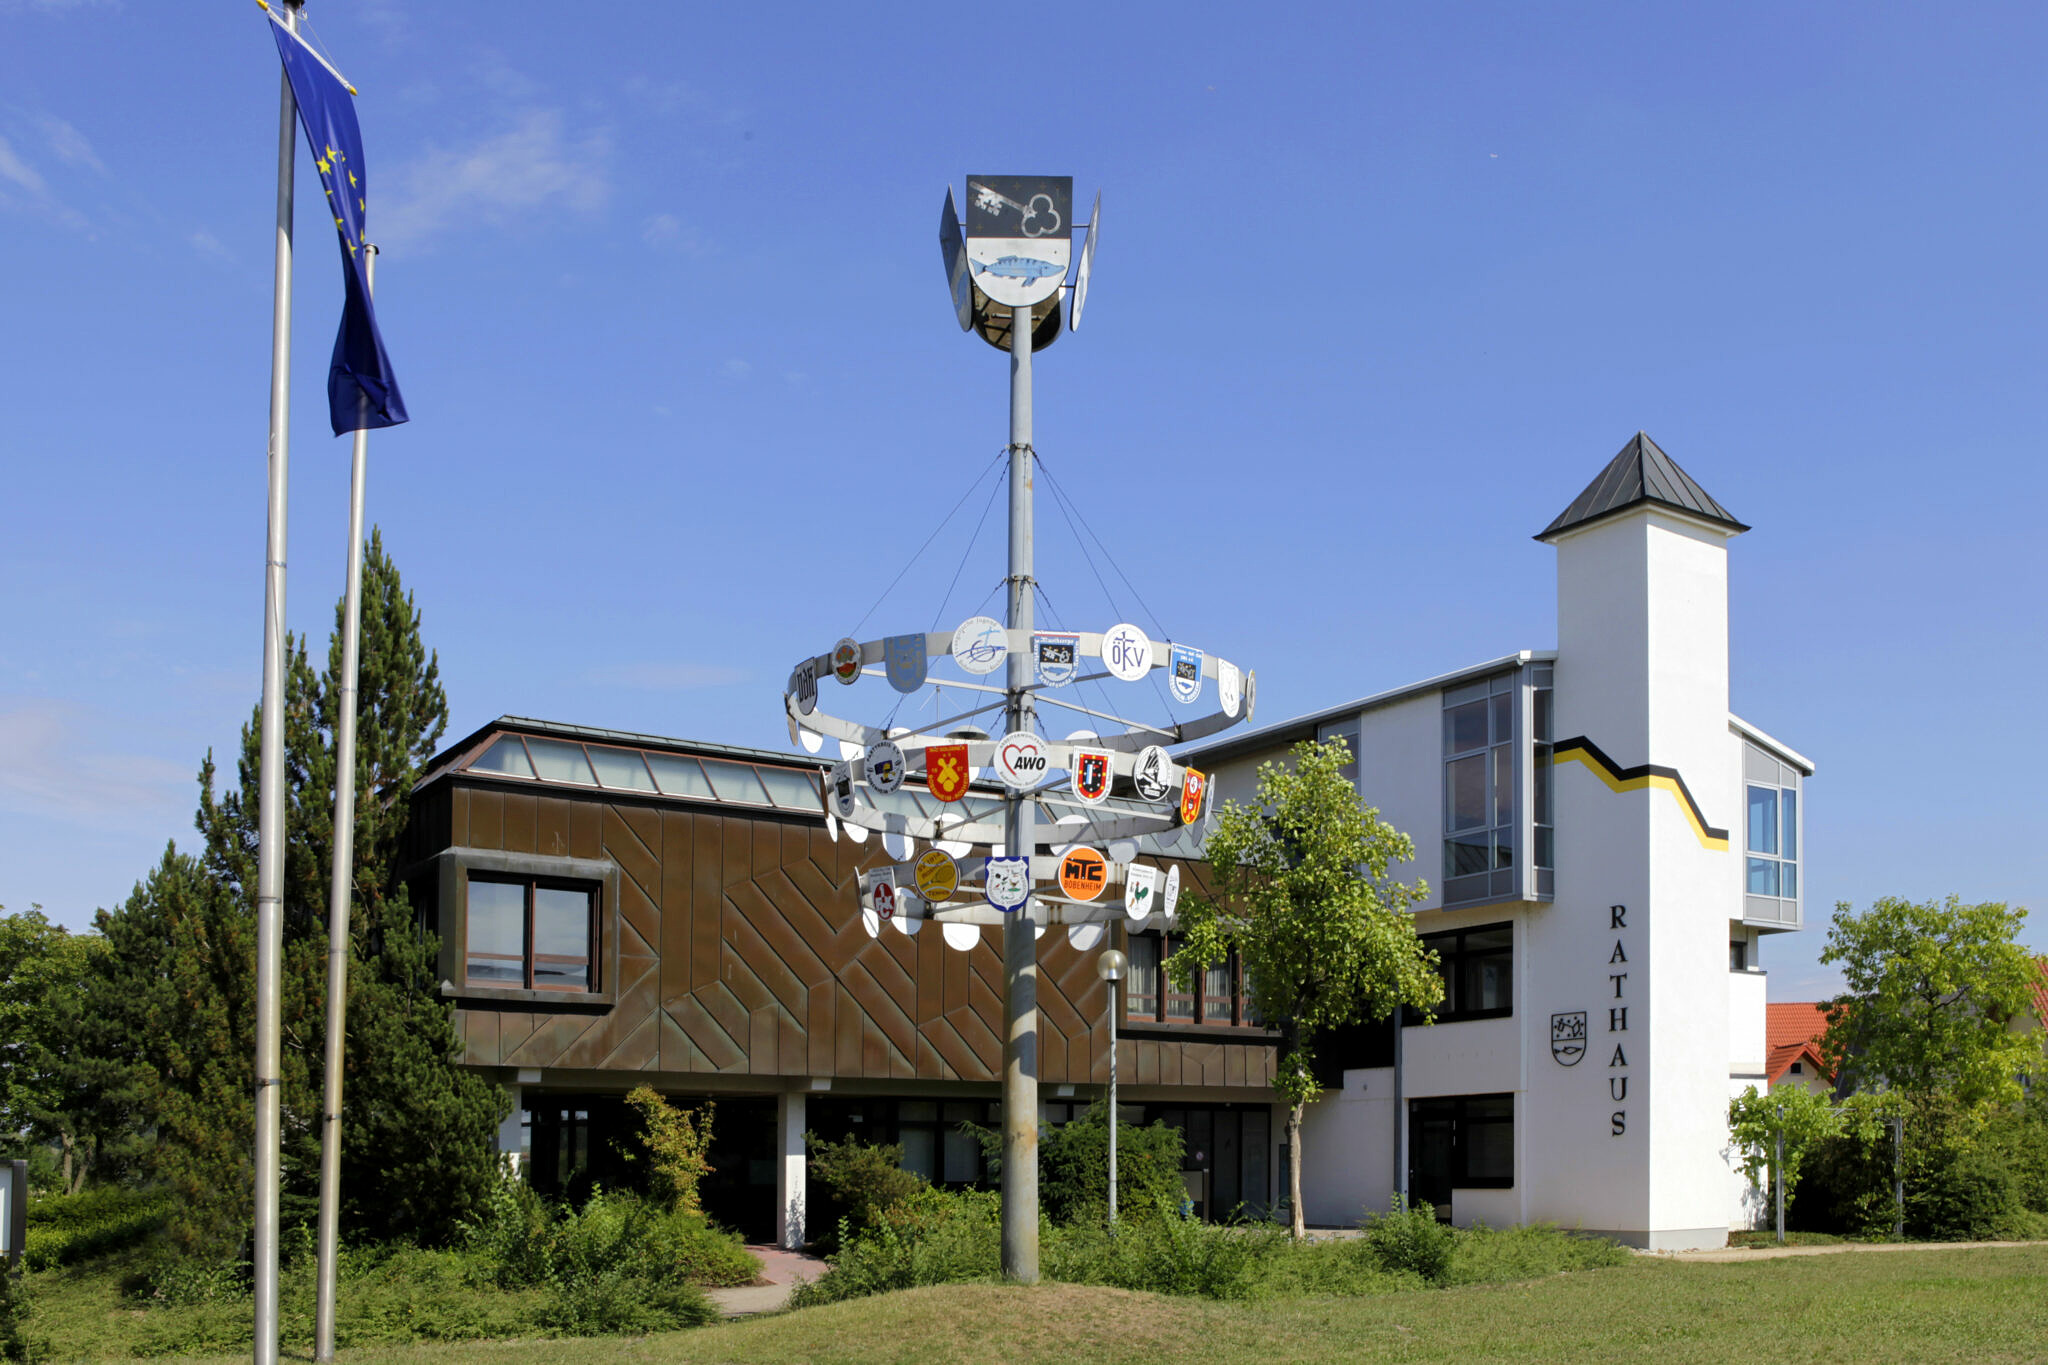 Borough of Bobenheim-Roxheim - Small local government, big digitization project